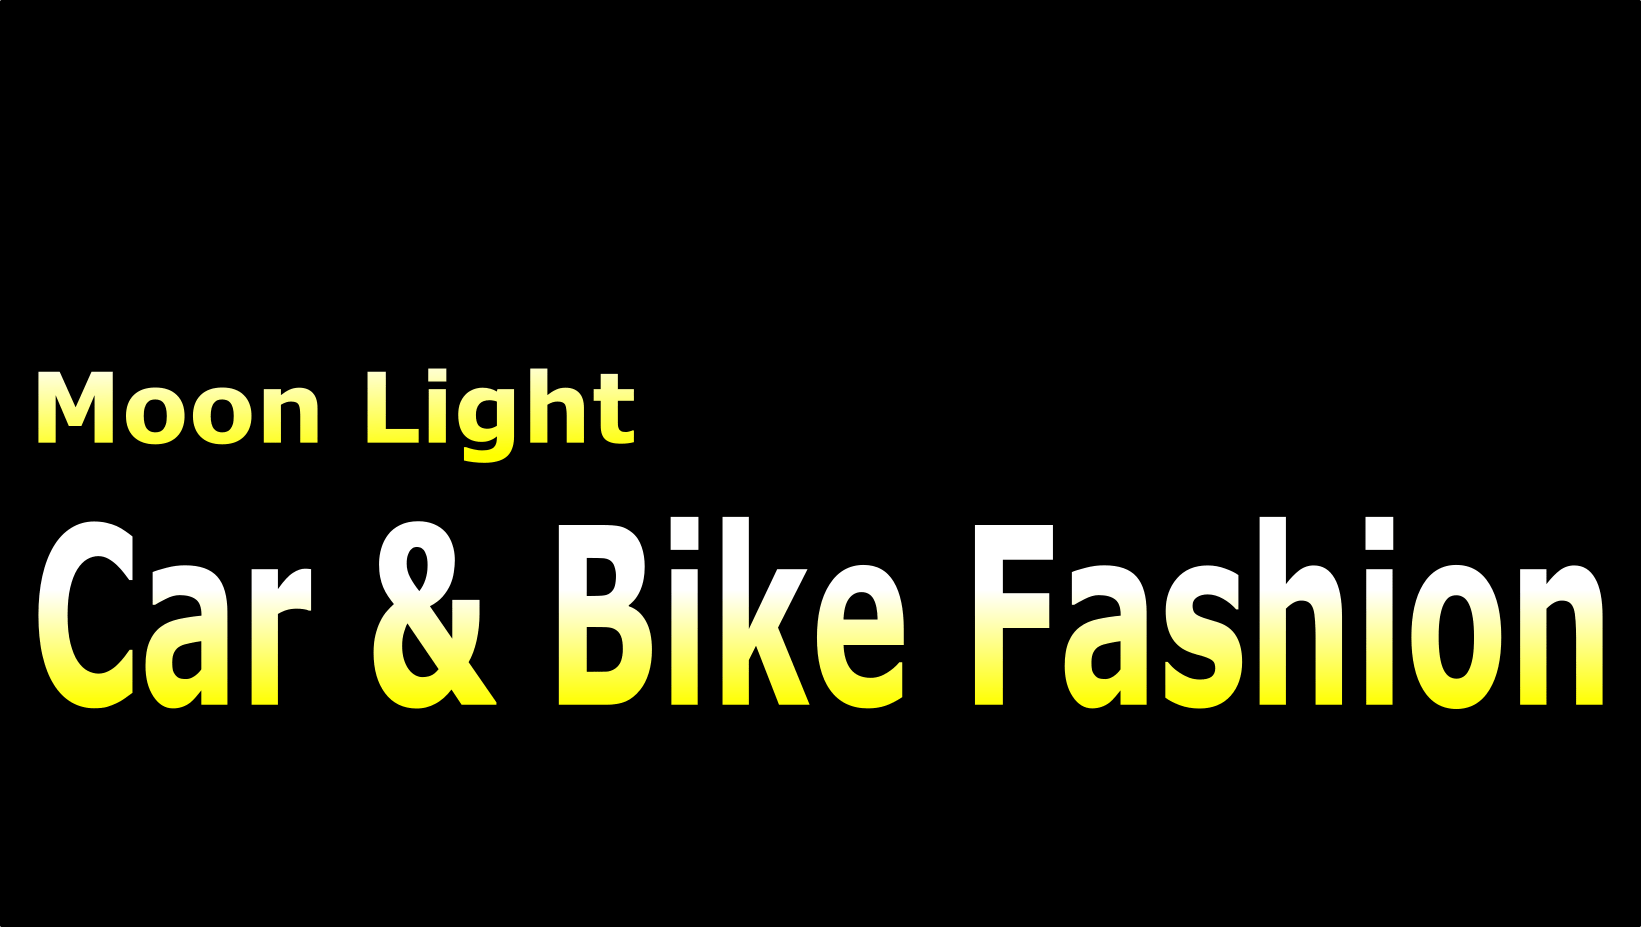 Moonlight Car & Bike Fashion